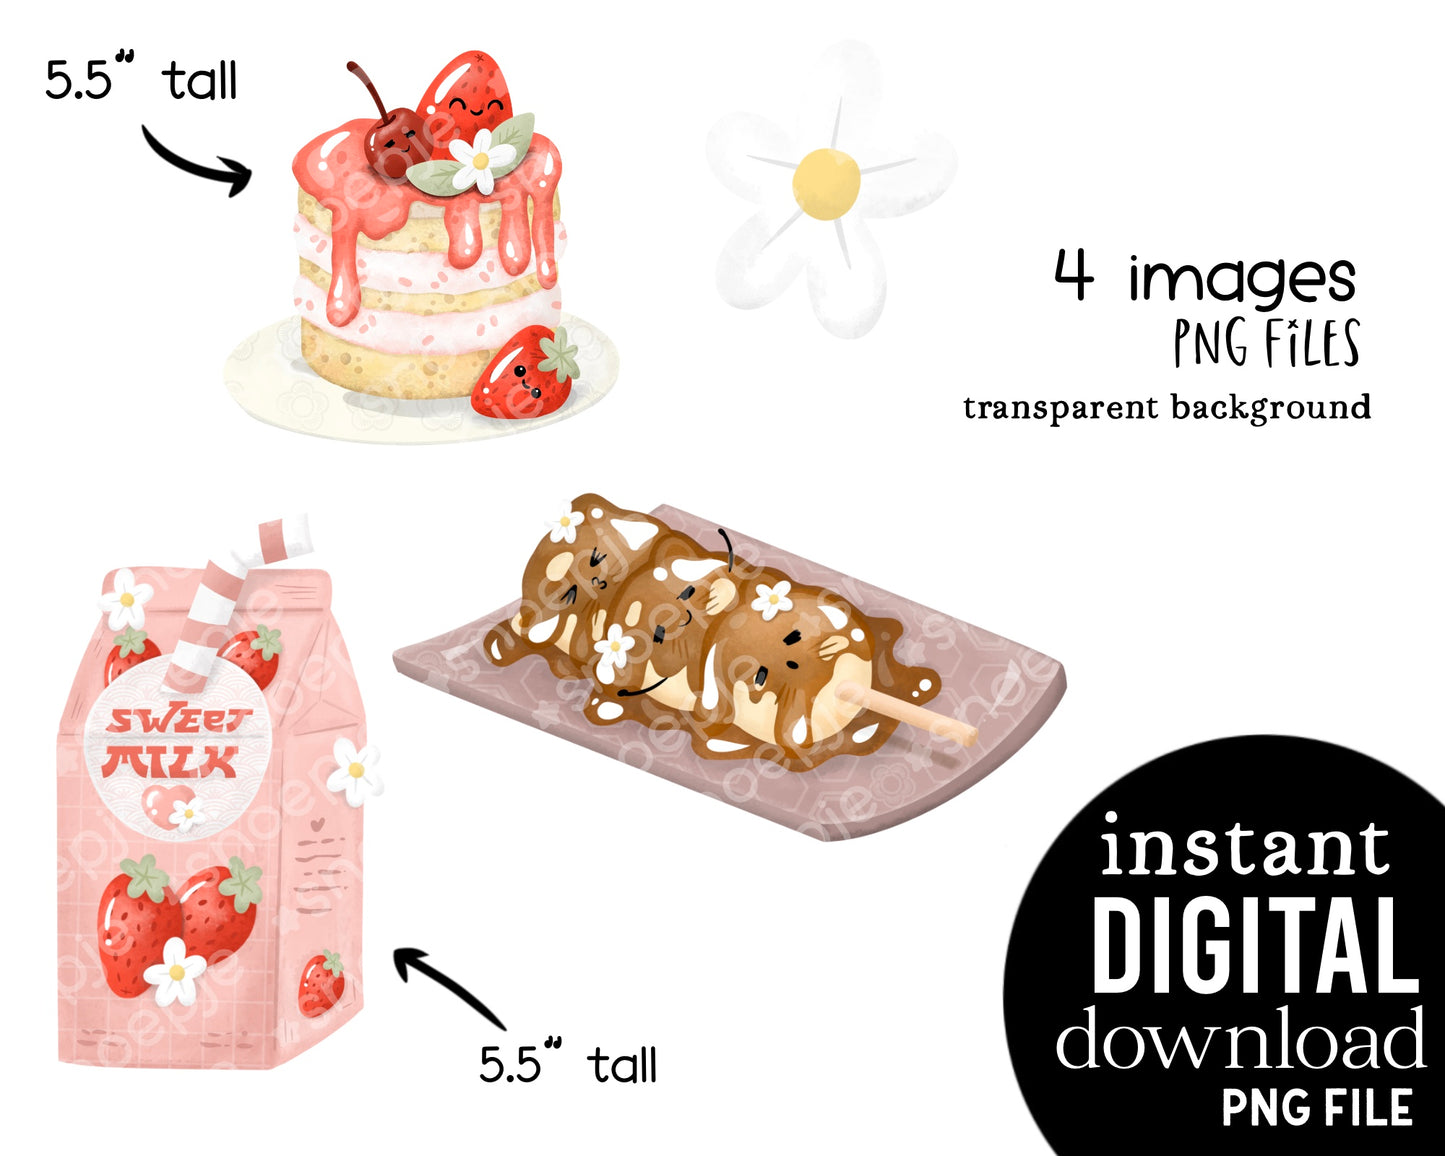 Strawberry Milk Kawaii Food Clipart Bundle